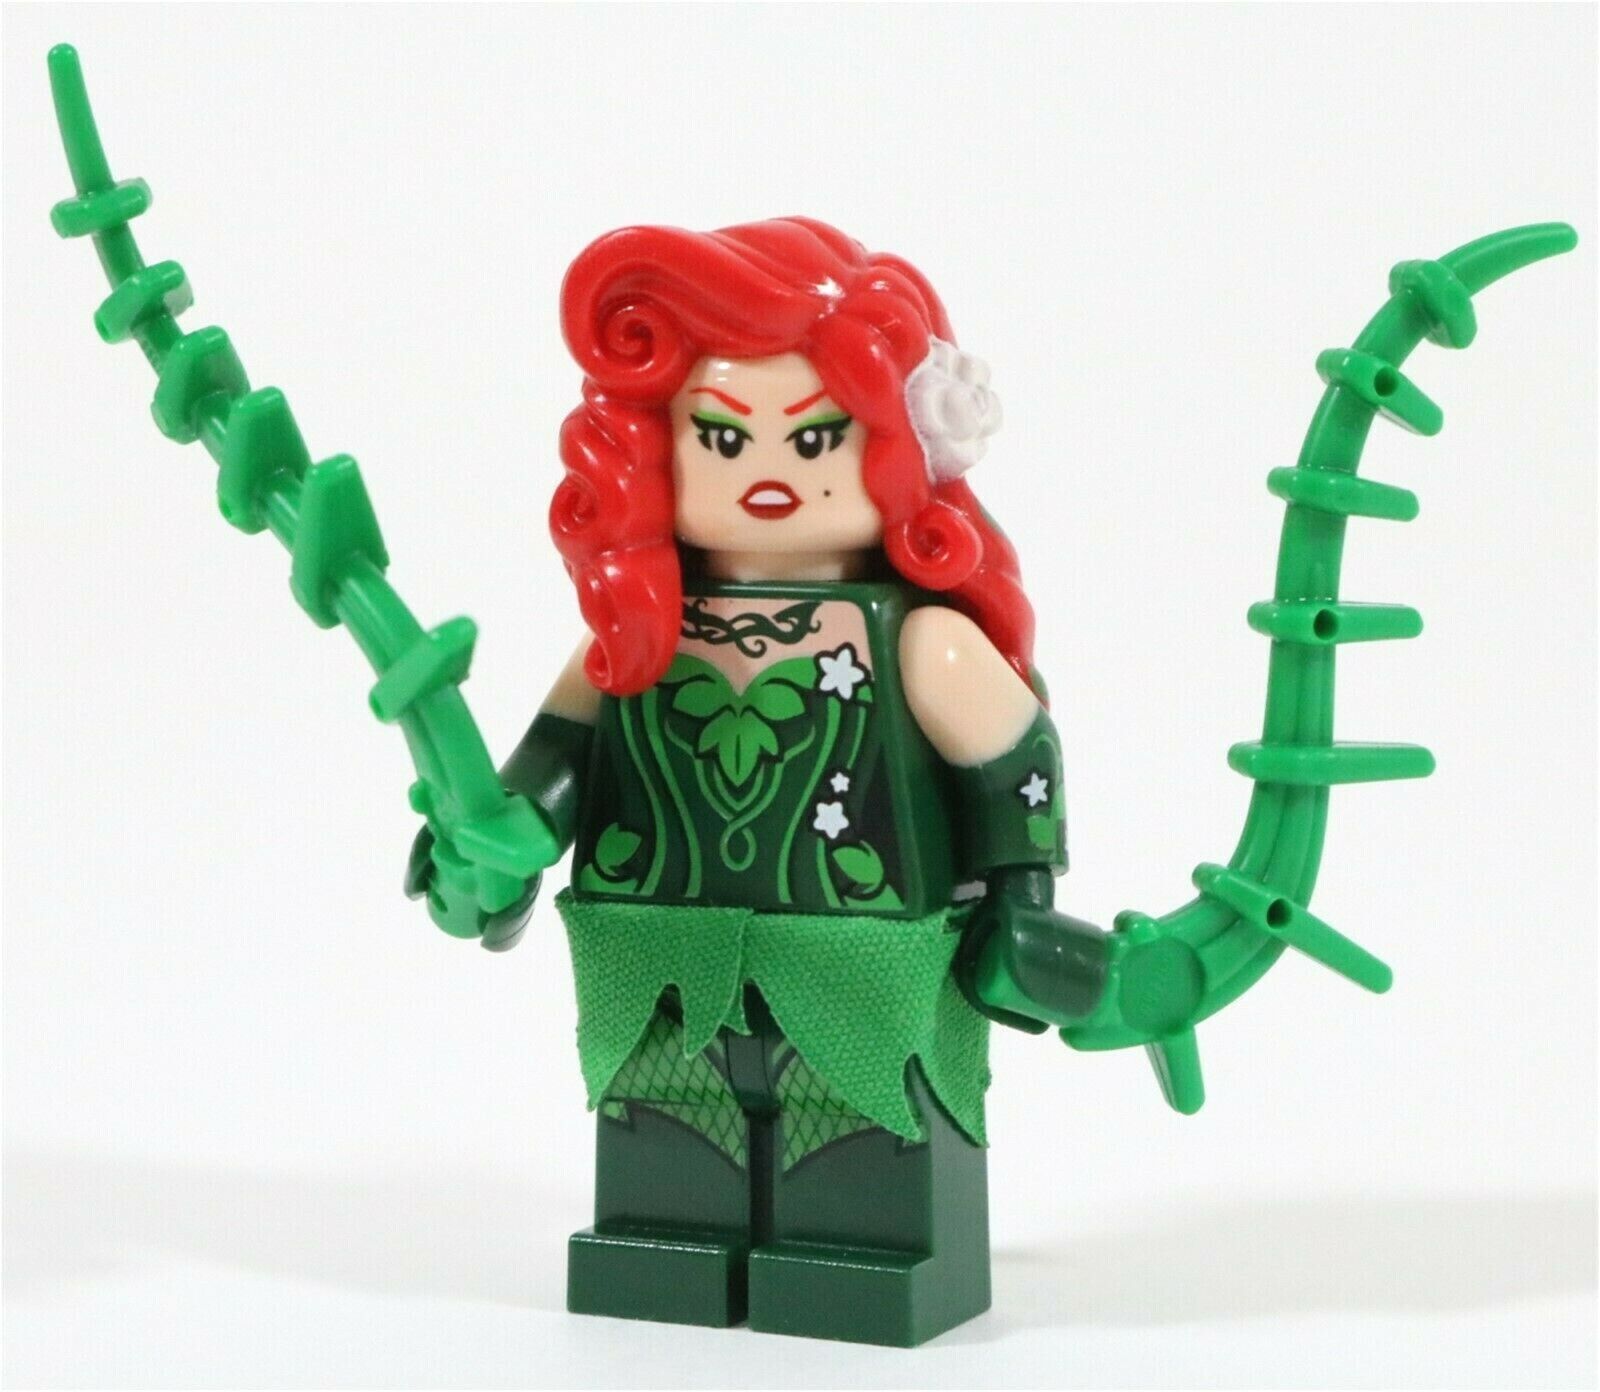 Poison Ivy - the Lego Batman Movie Minifigures Delsbricks   